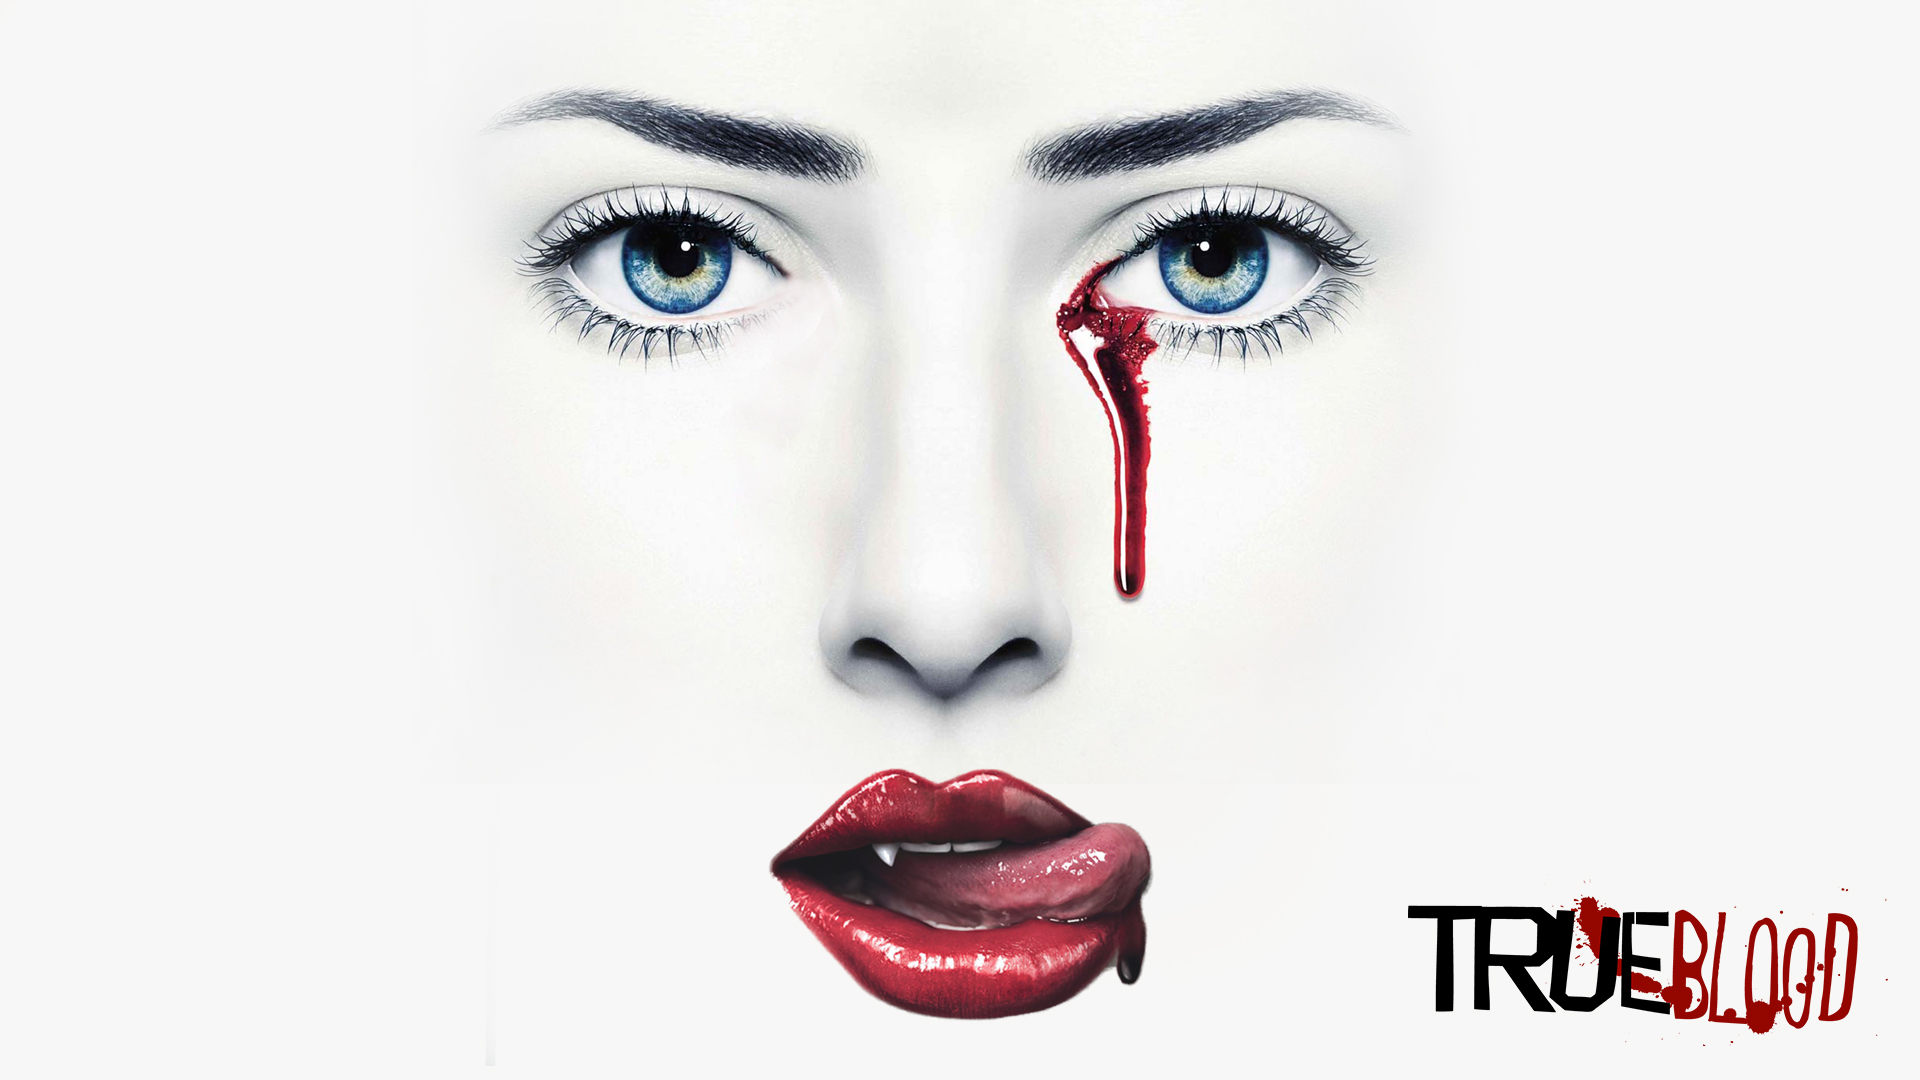 True Blood HD Wallpapers for desktop download